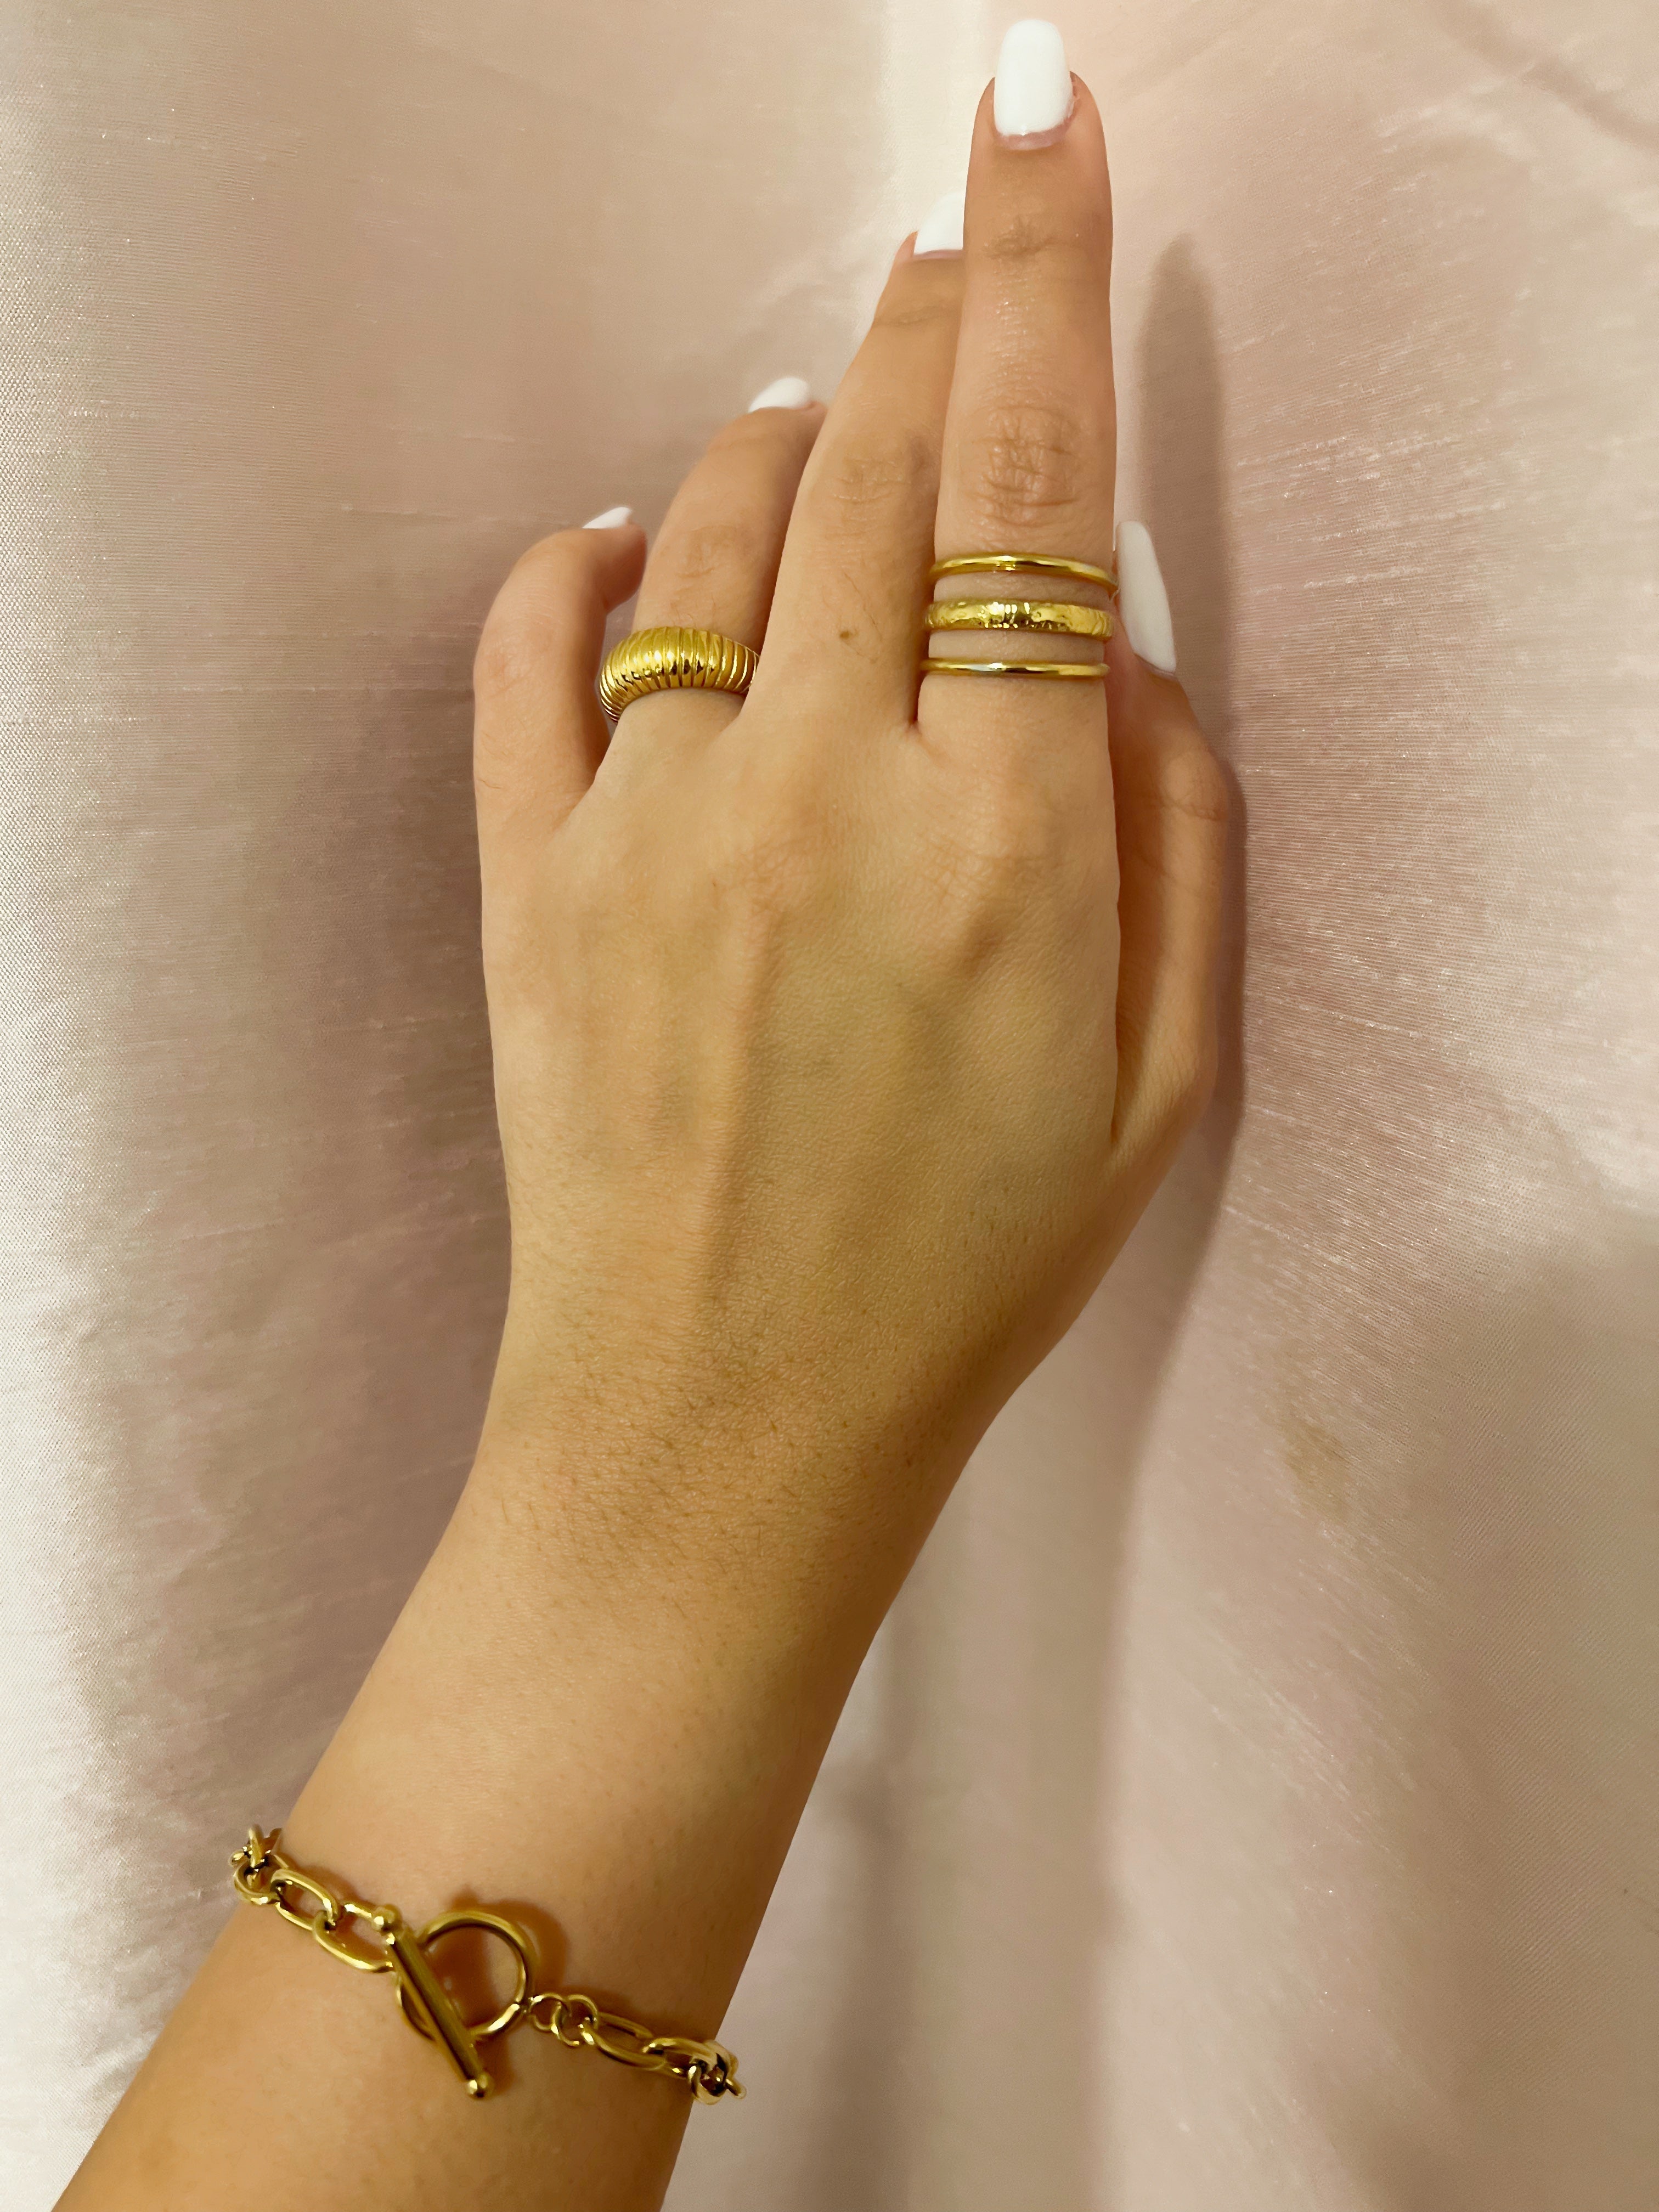 Buy rings in an elegant design online | no jewelry